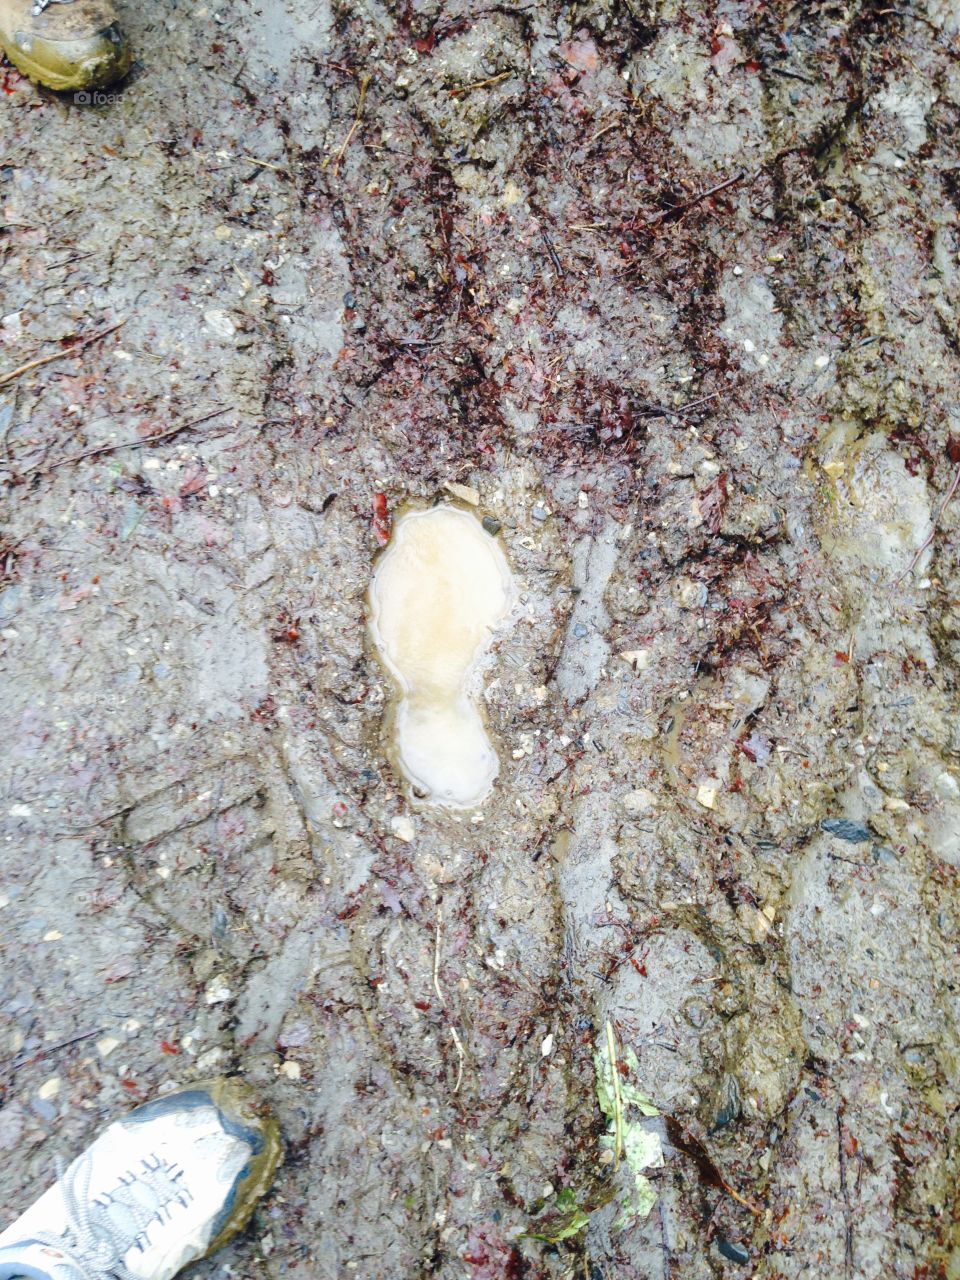 Muddy Footprint